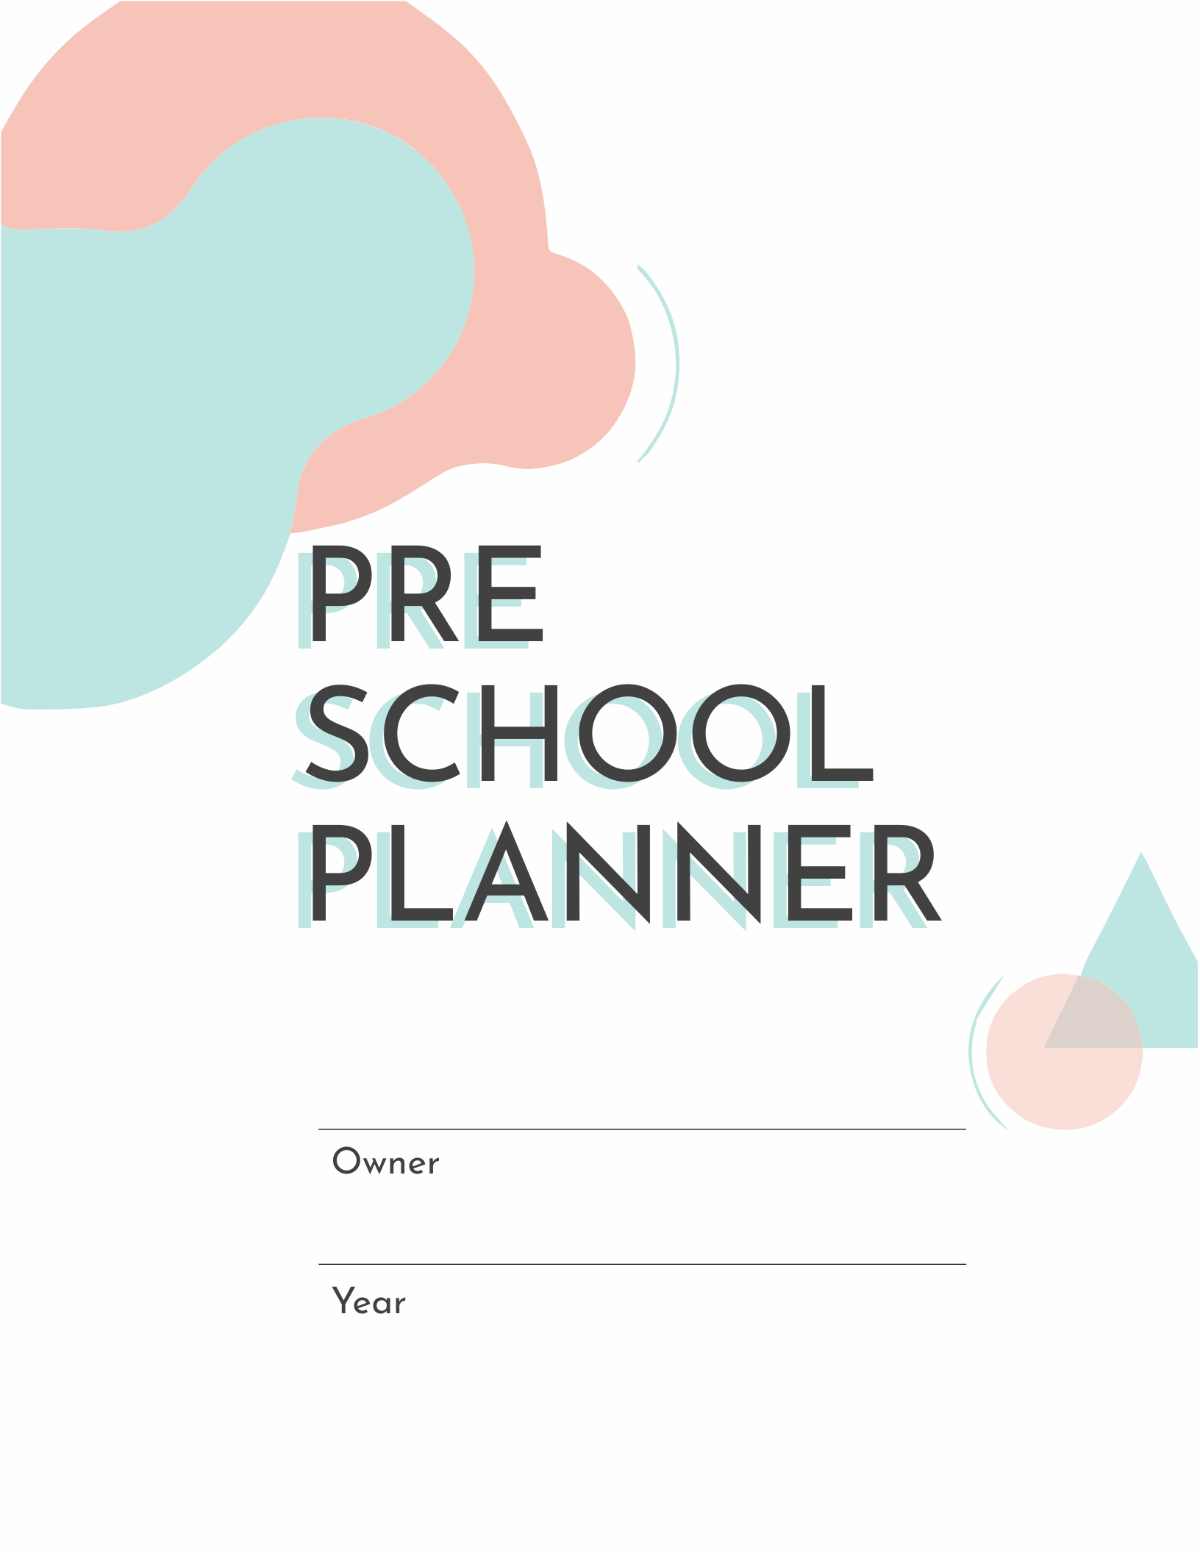 Daily Preschool Planner Template